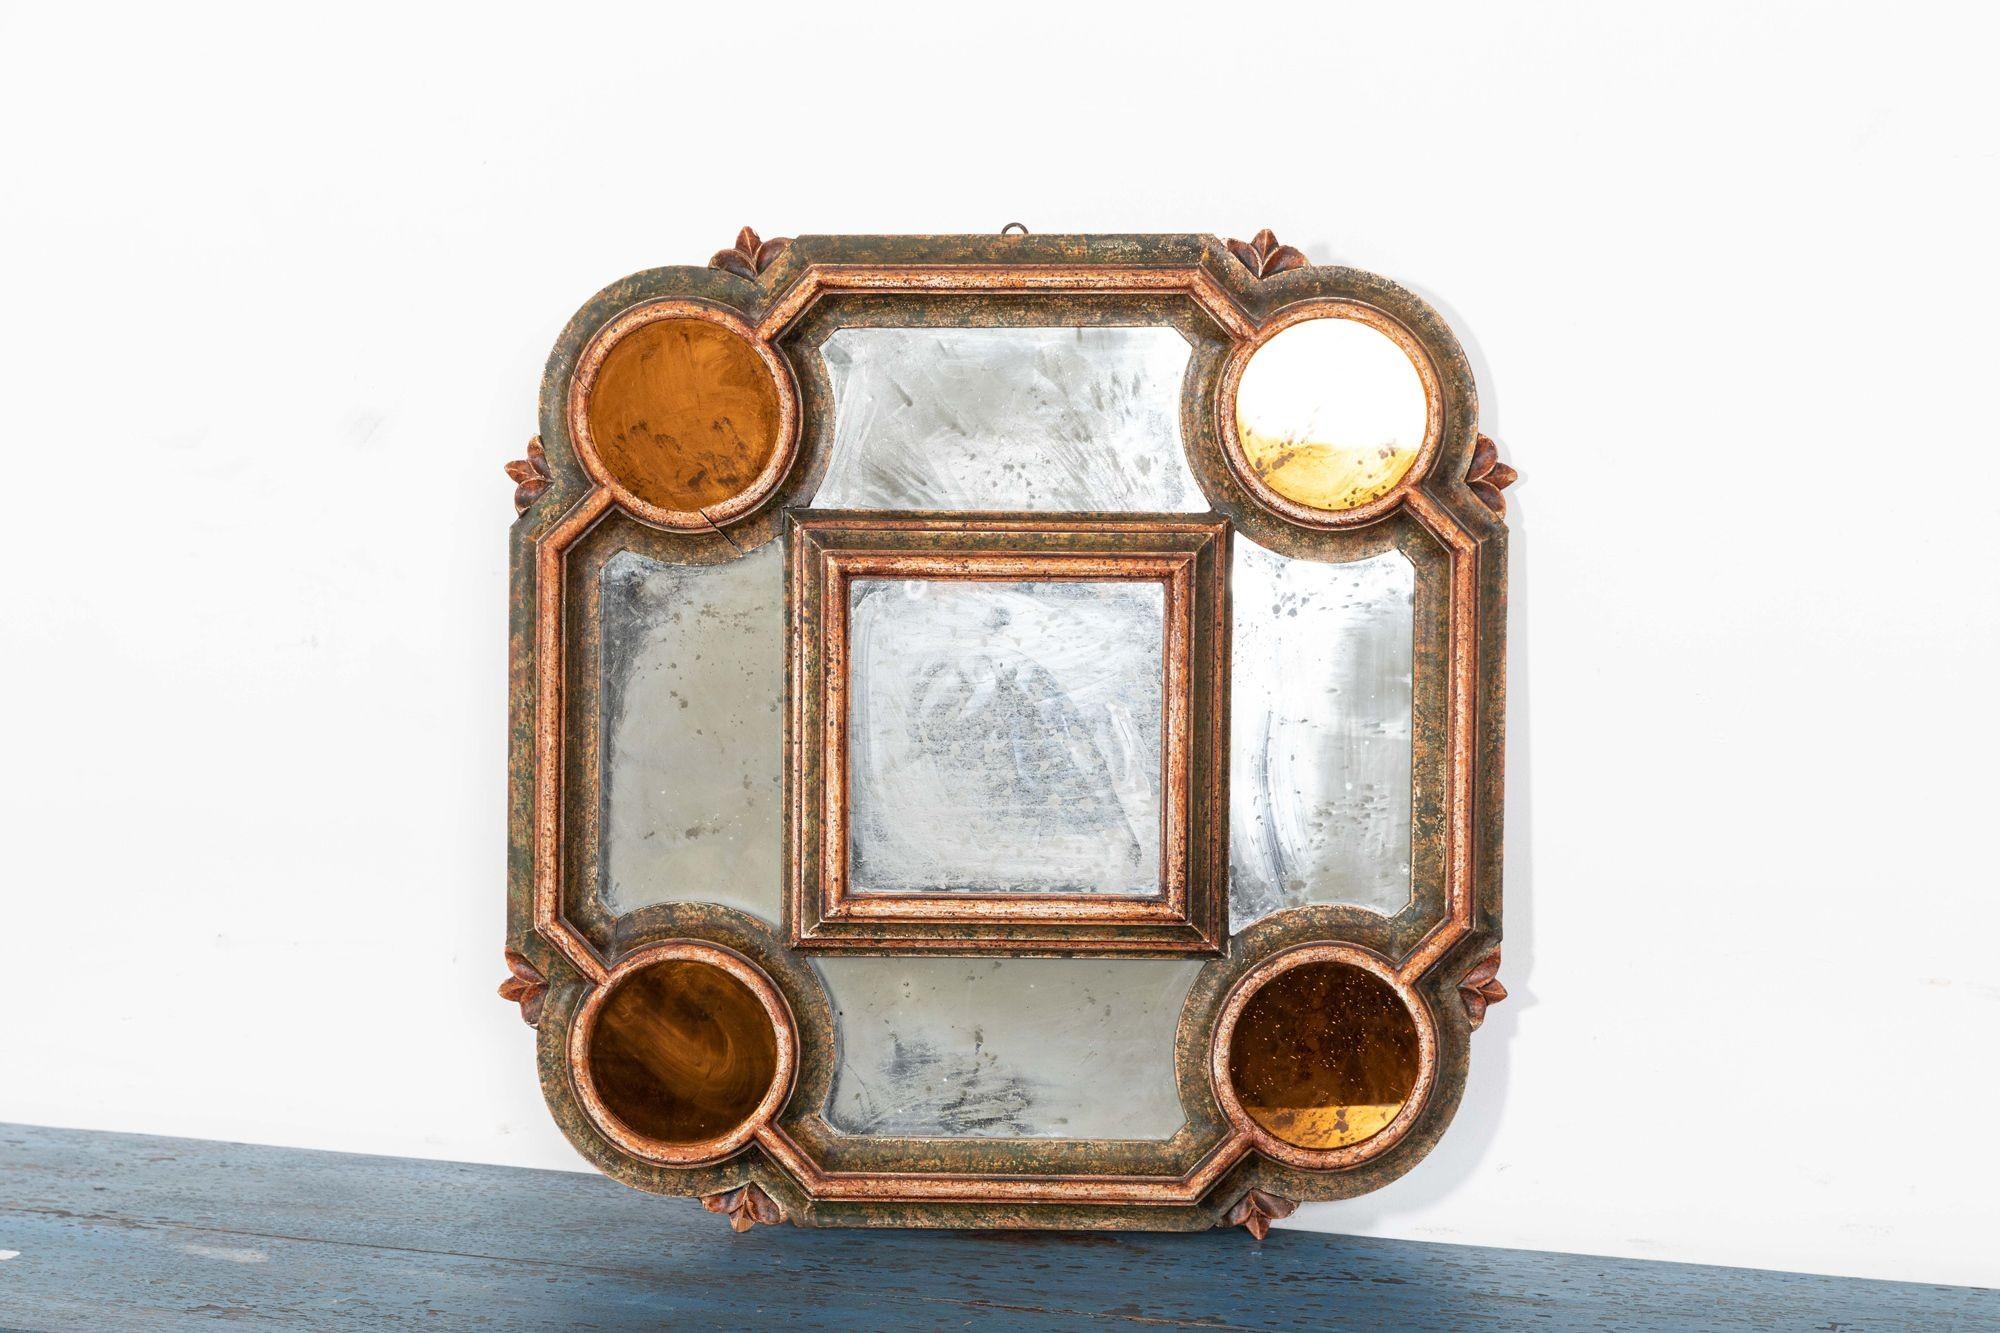 Circa 1890
19thC French Foxed Polychrome wall mirror
W65 x D6 x H75 cm.
 